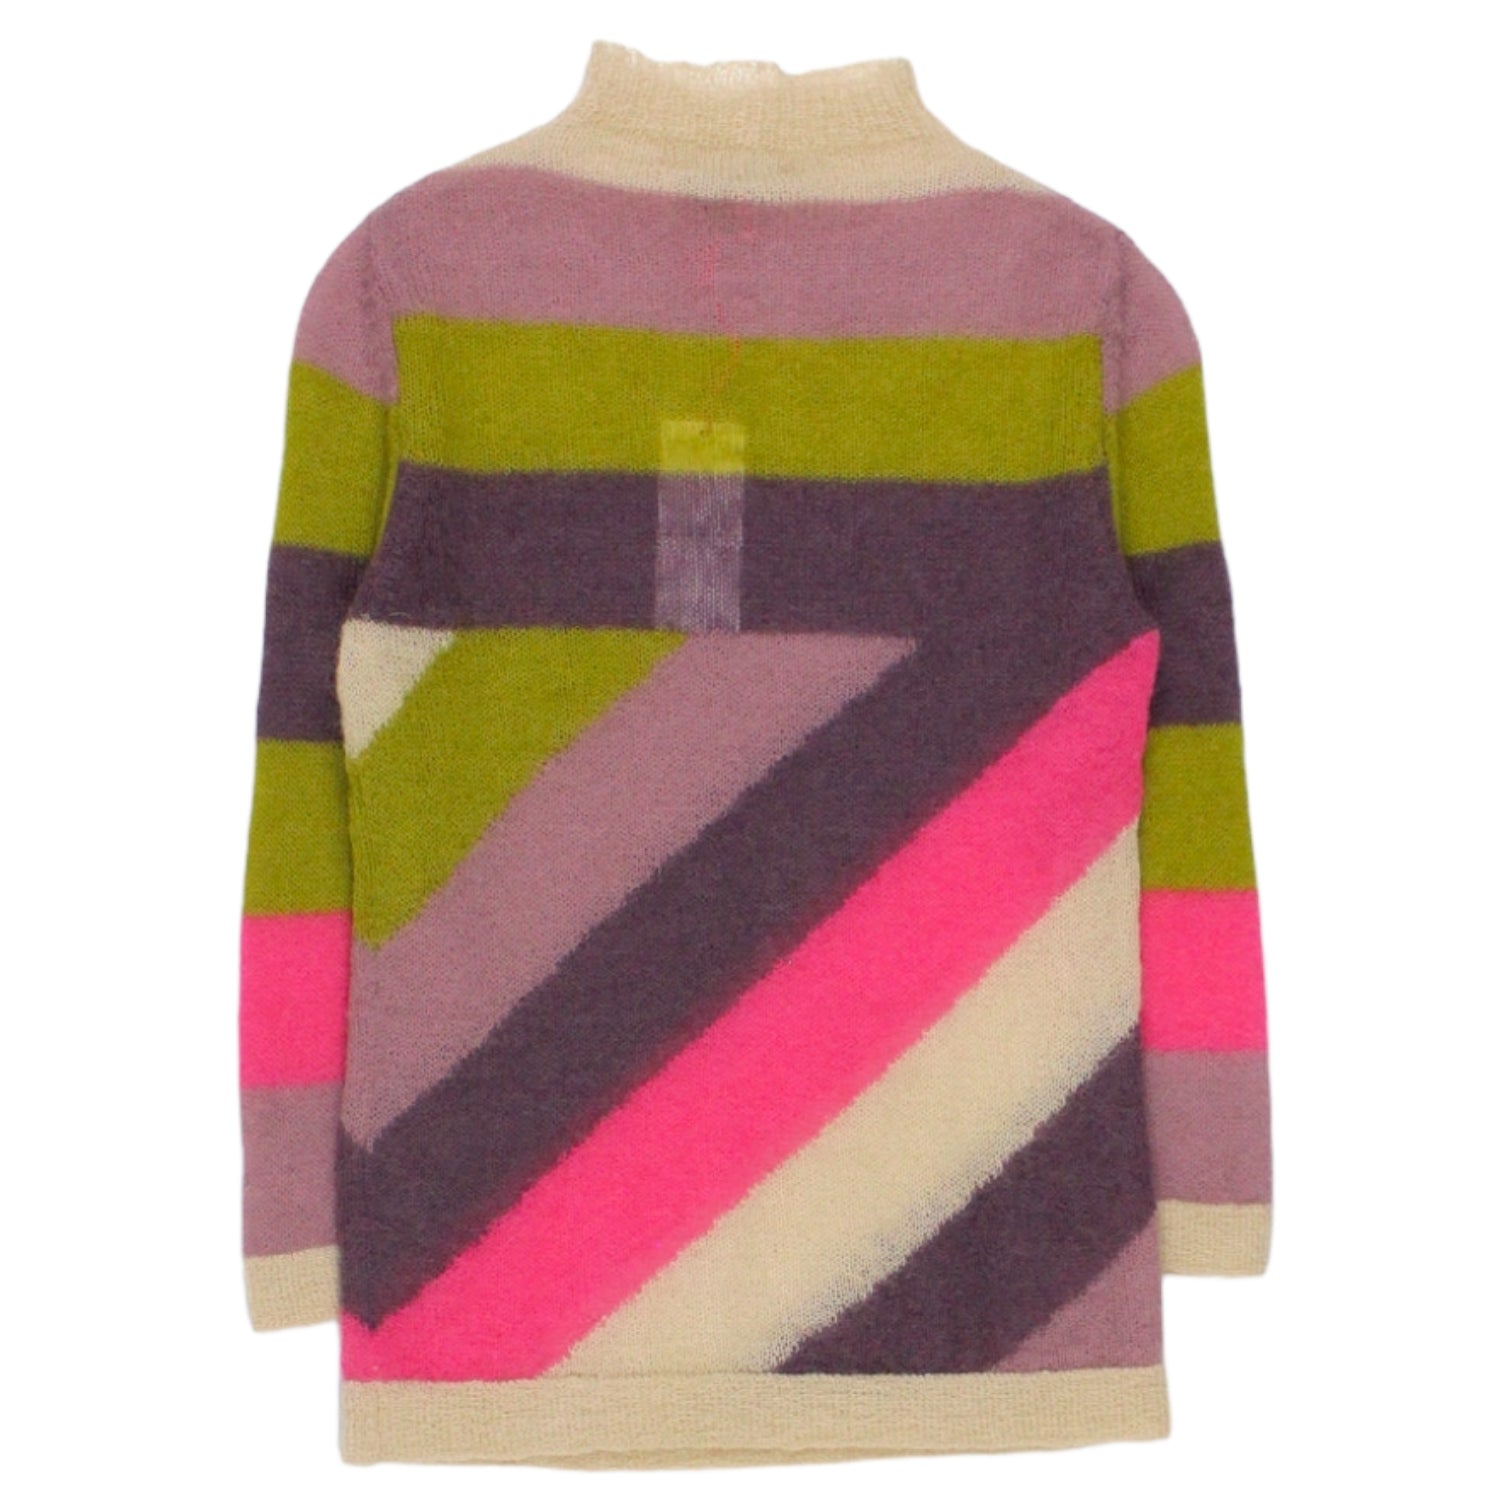 Orla Kiely Plum Striped Mohair Sweater